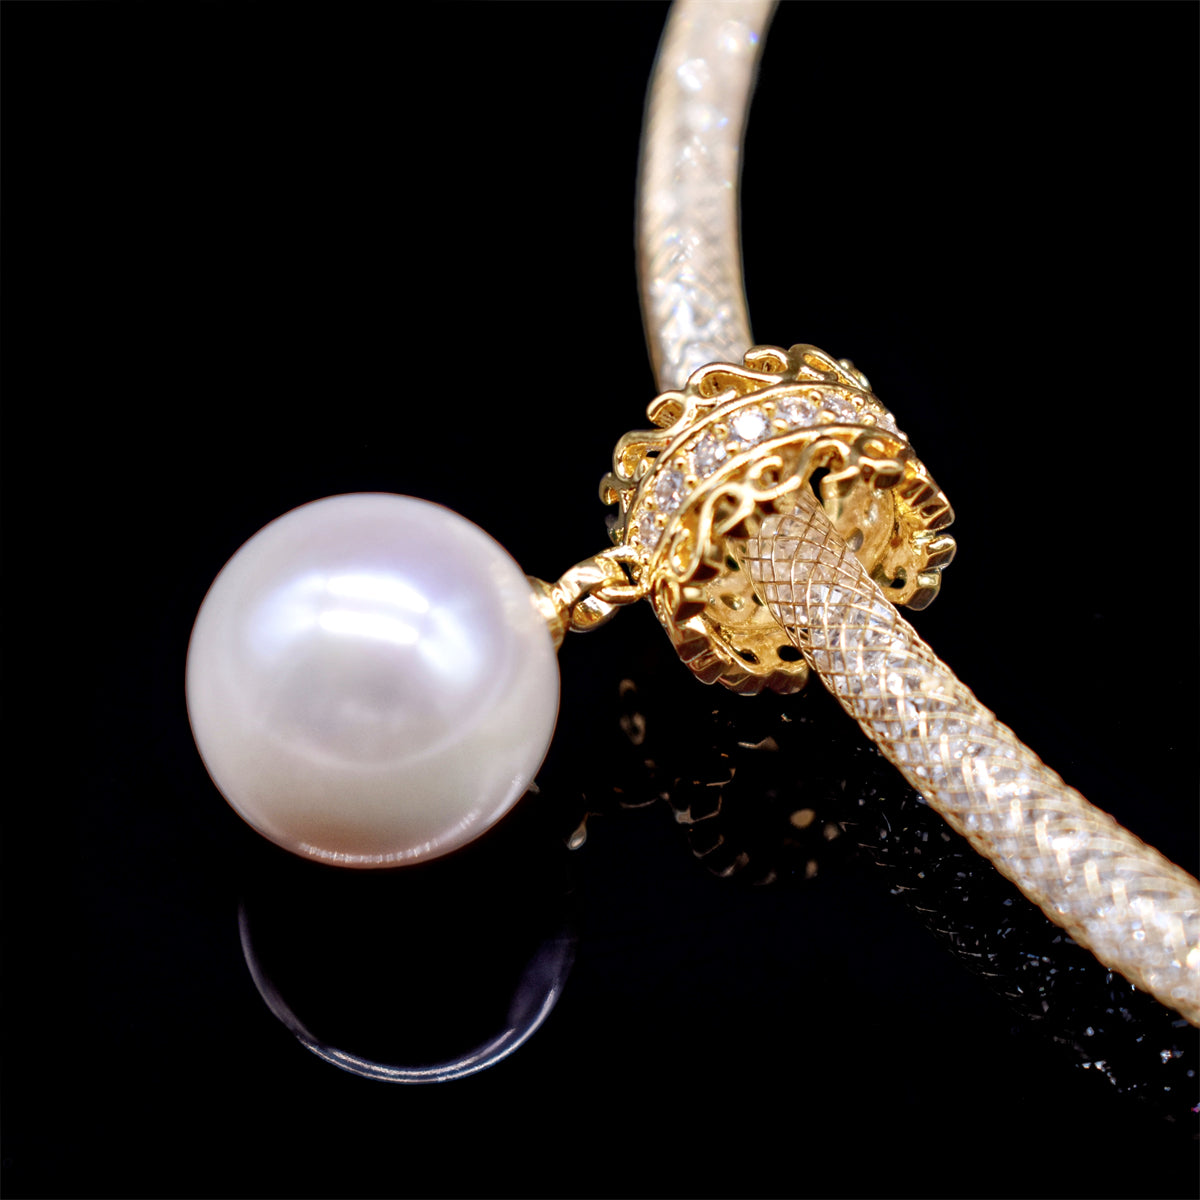 Freshwater Pearl Pendant Necklace - Lorelei - Akuna Pearls